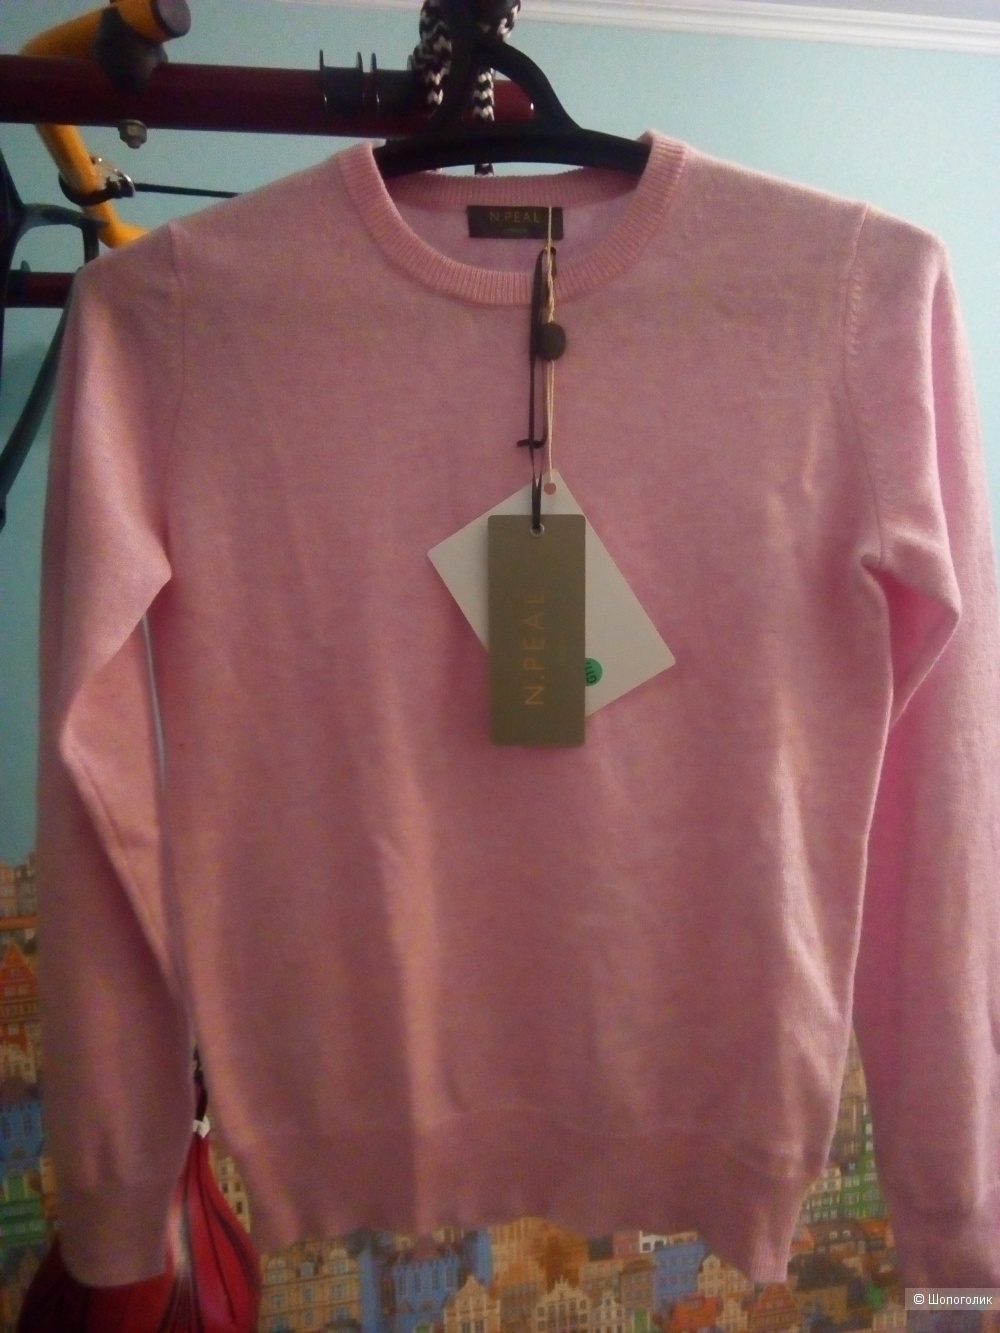 Кашемировый свитер N.Peal, размер XS